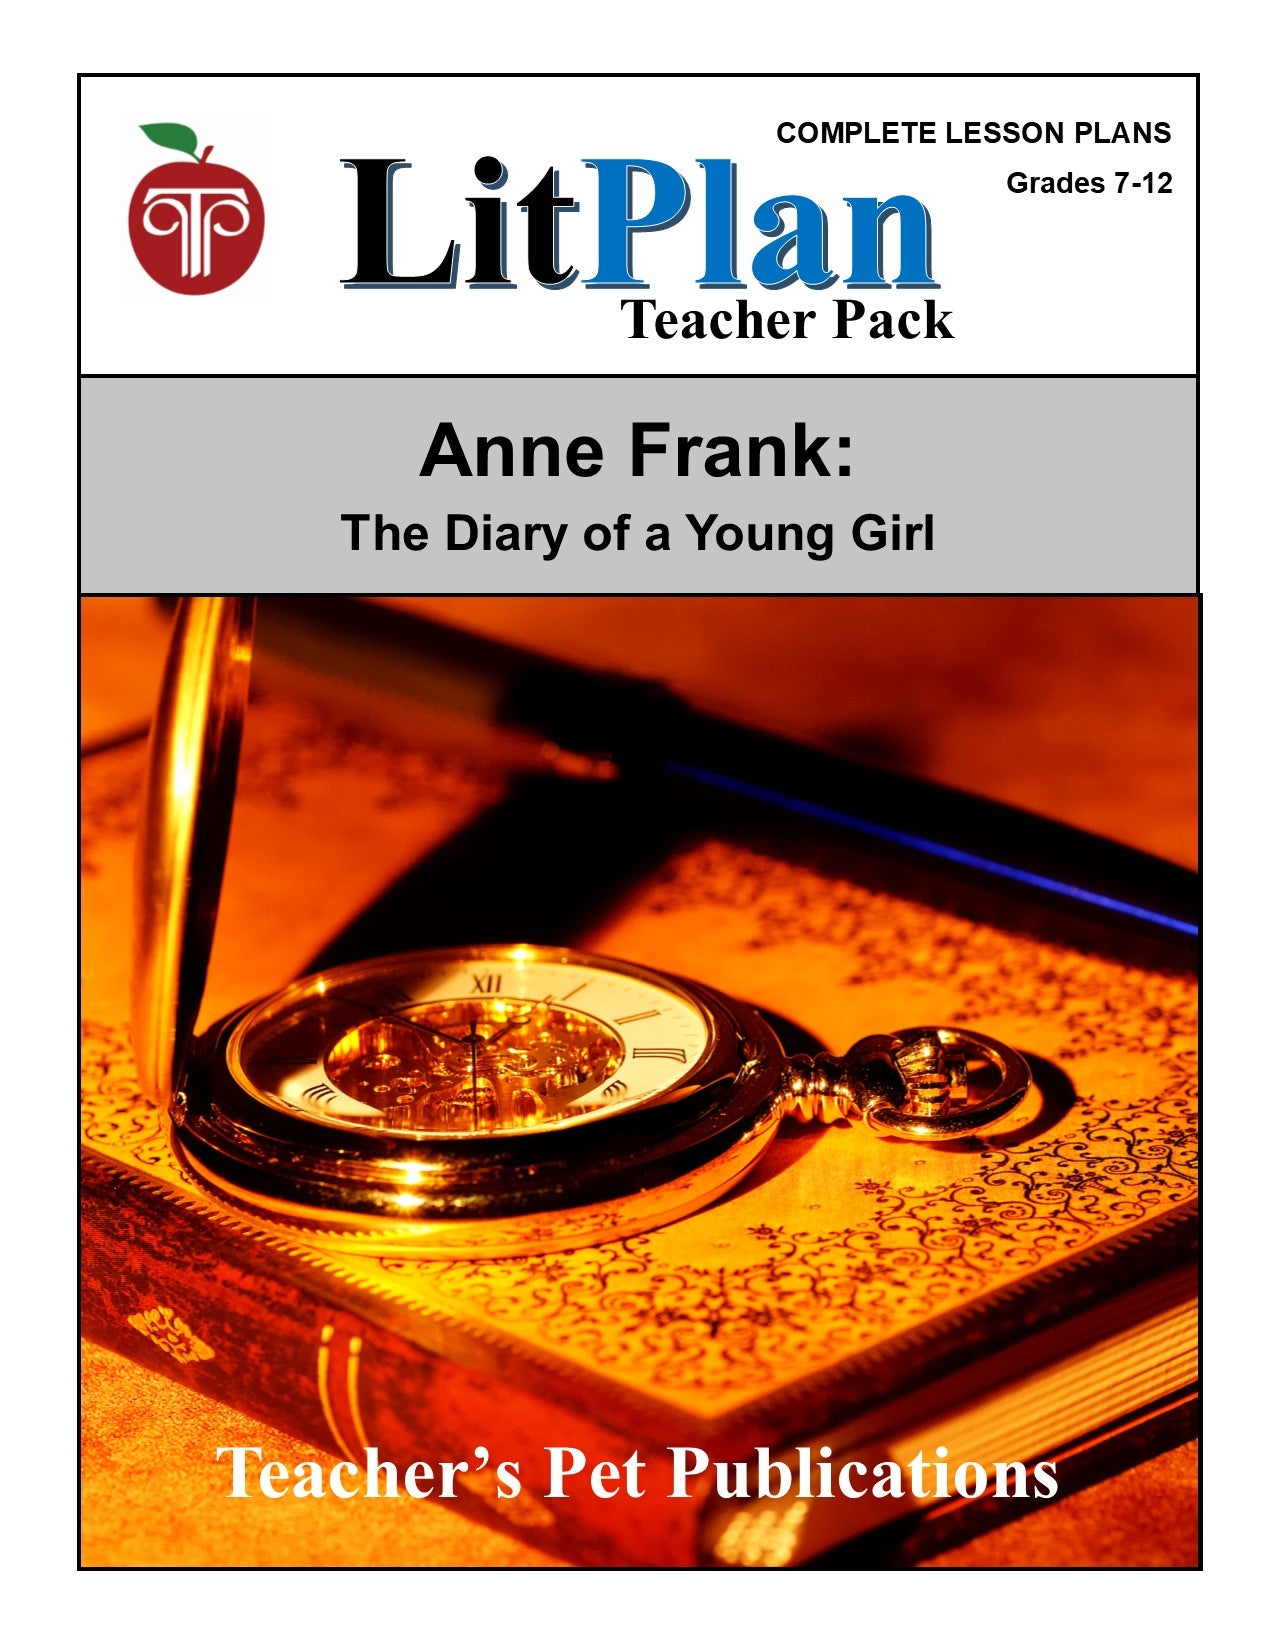 Anne Frank - Diary of a Young Girl: LitPlan Teacher Pack Grades 7-12